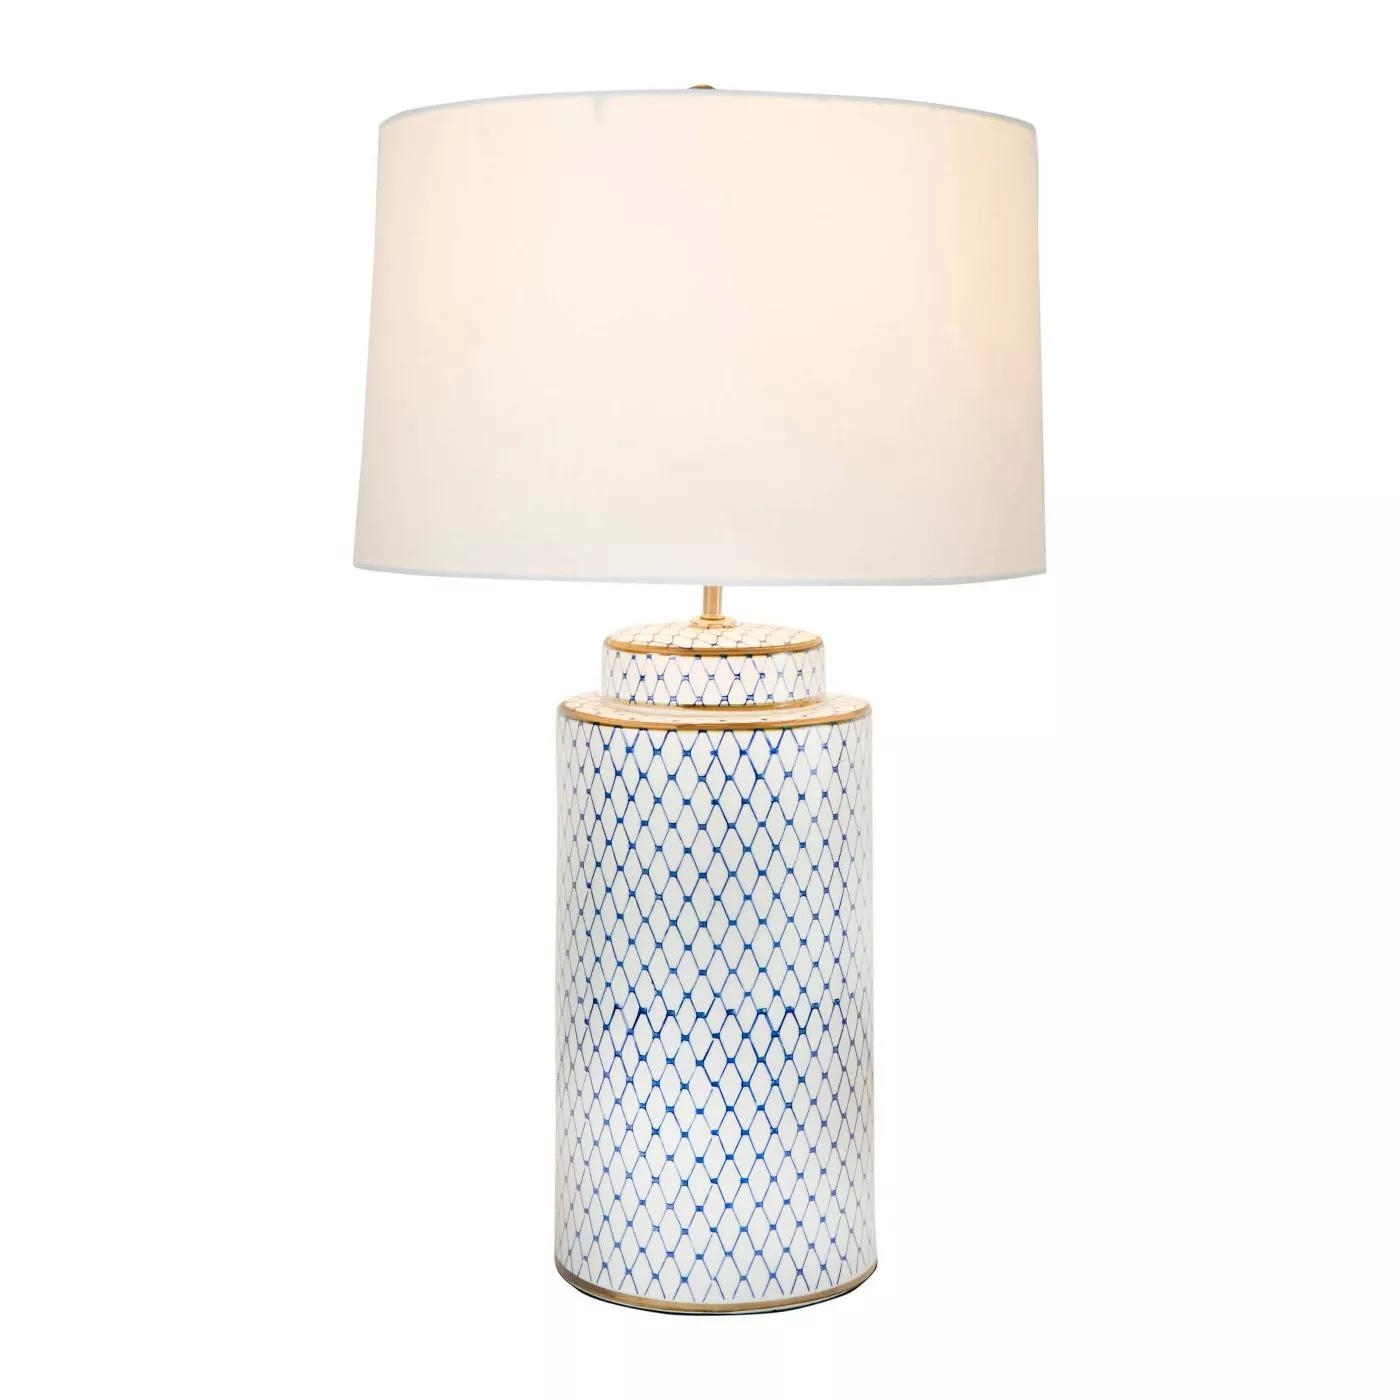 Ceramic Table lamp with Linen Shade, Indigo & White - Image 2